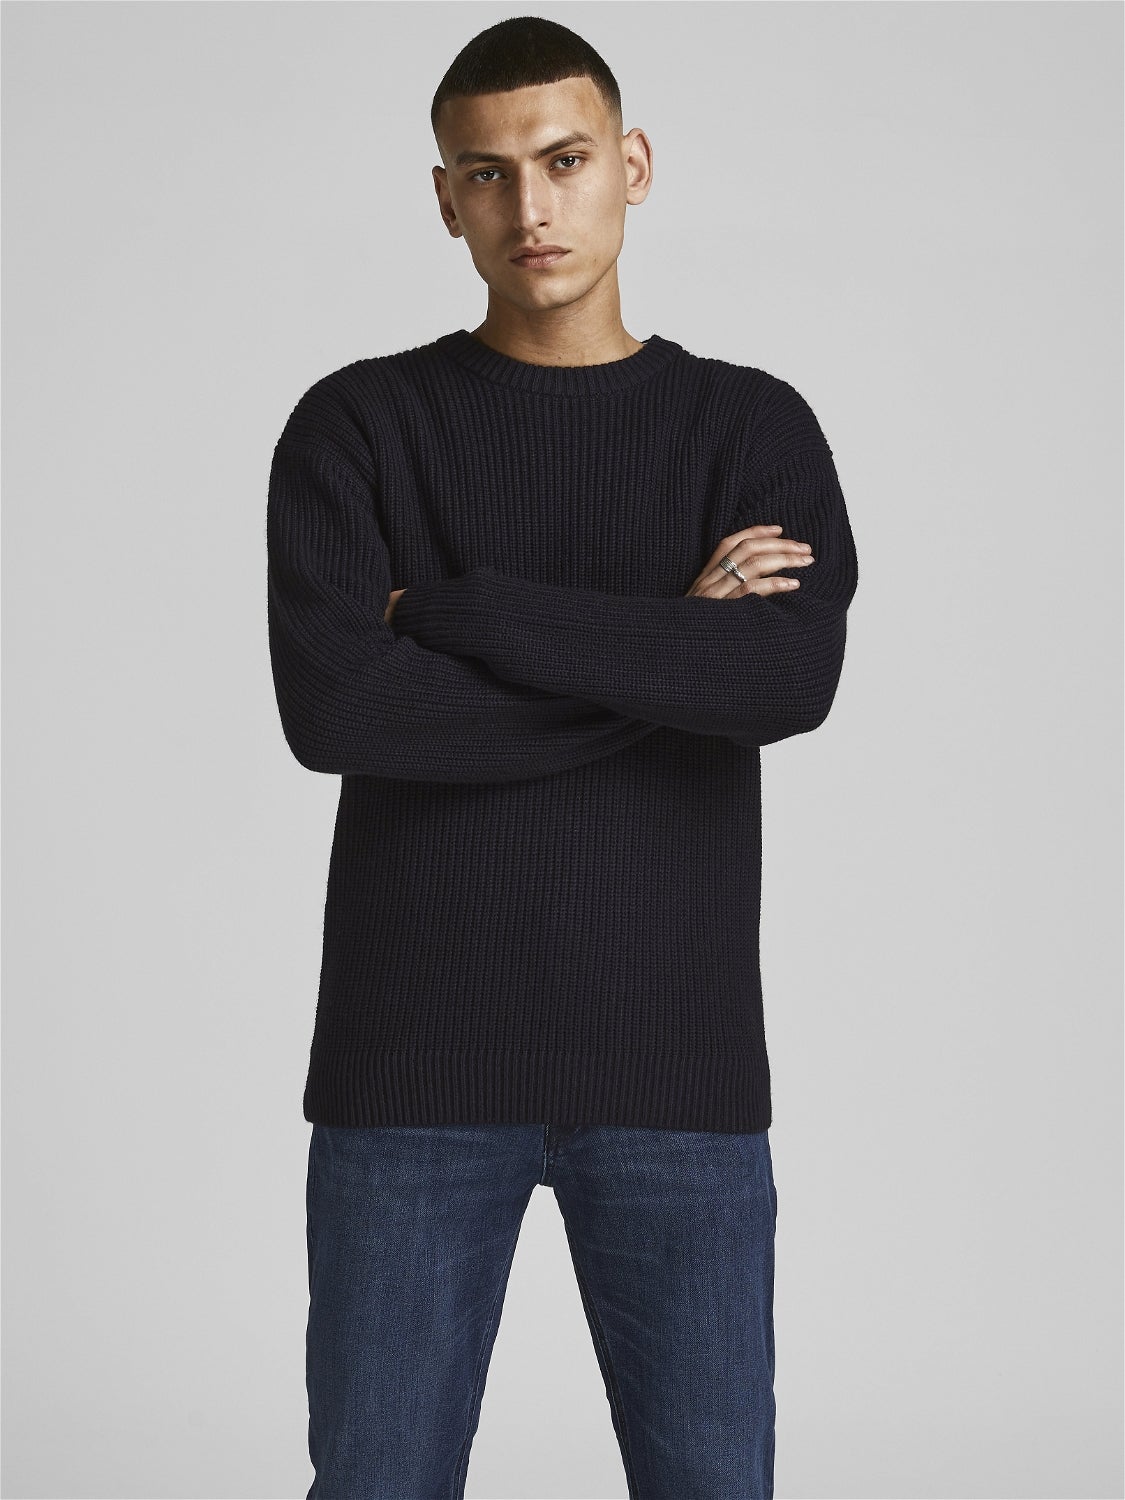 het dossier Gemoedsrust aluminium Jacquard weave Knitted Pullover with 50% discount! | Jack & Jones®